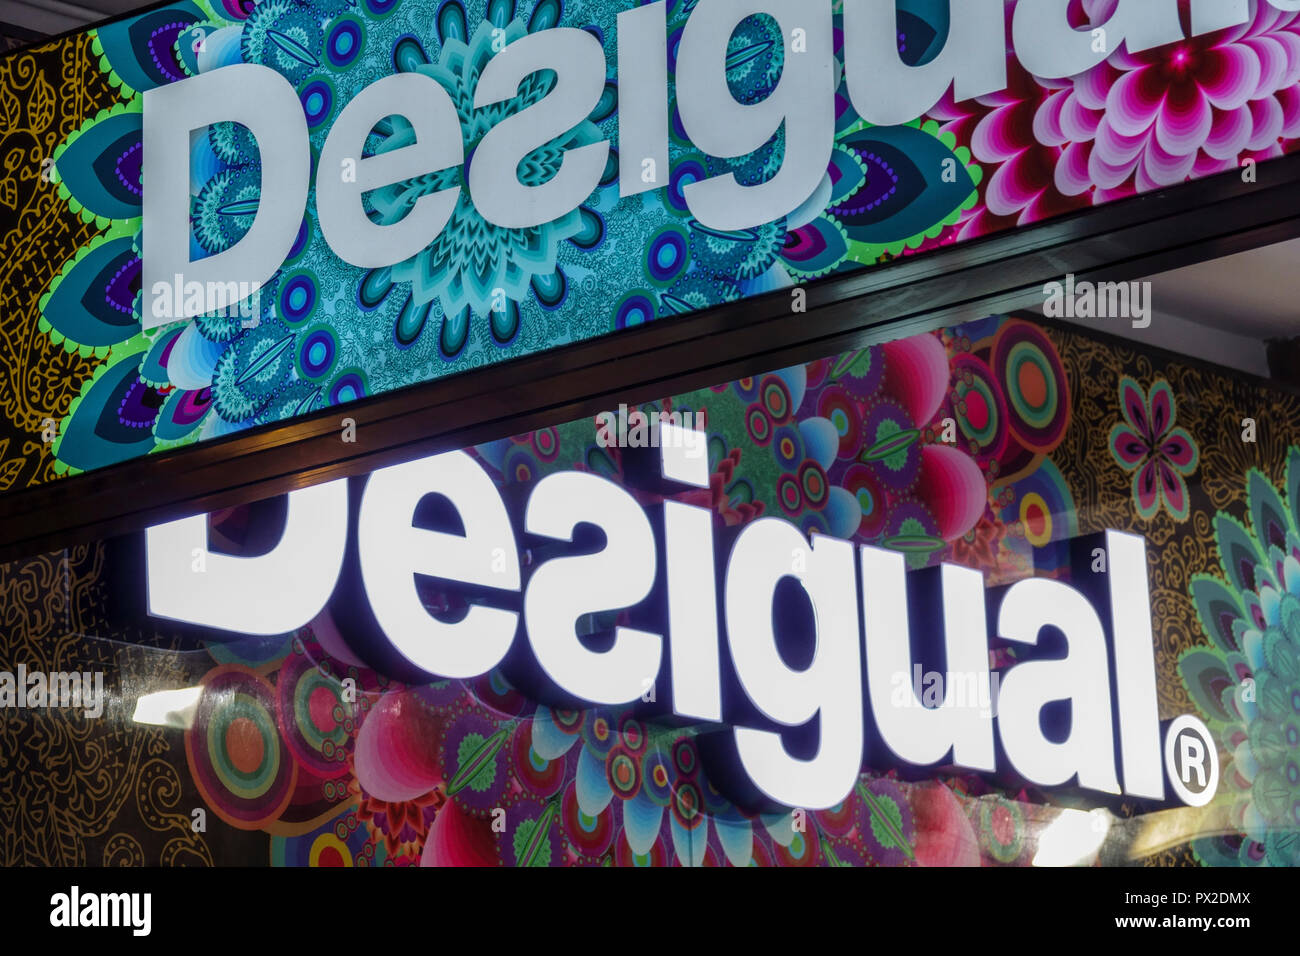 Desigual logo Spain luxury store sign Stock Photo